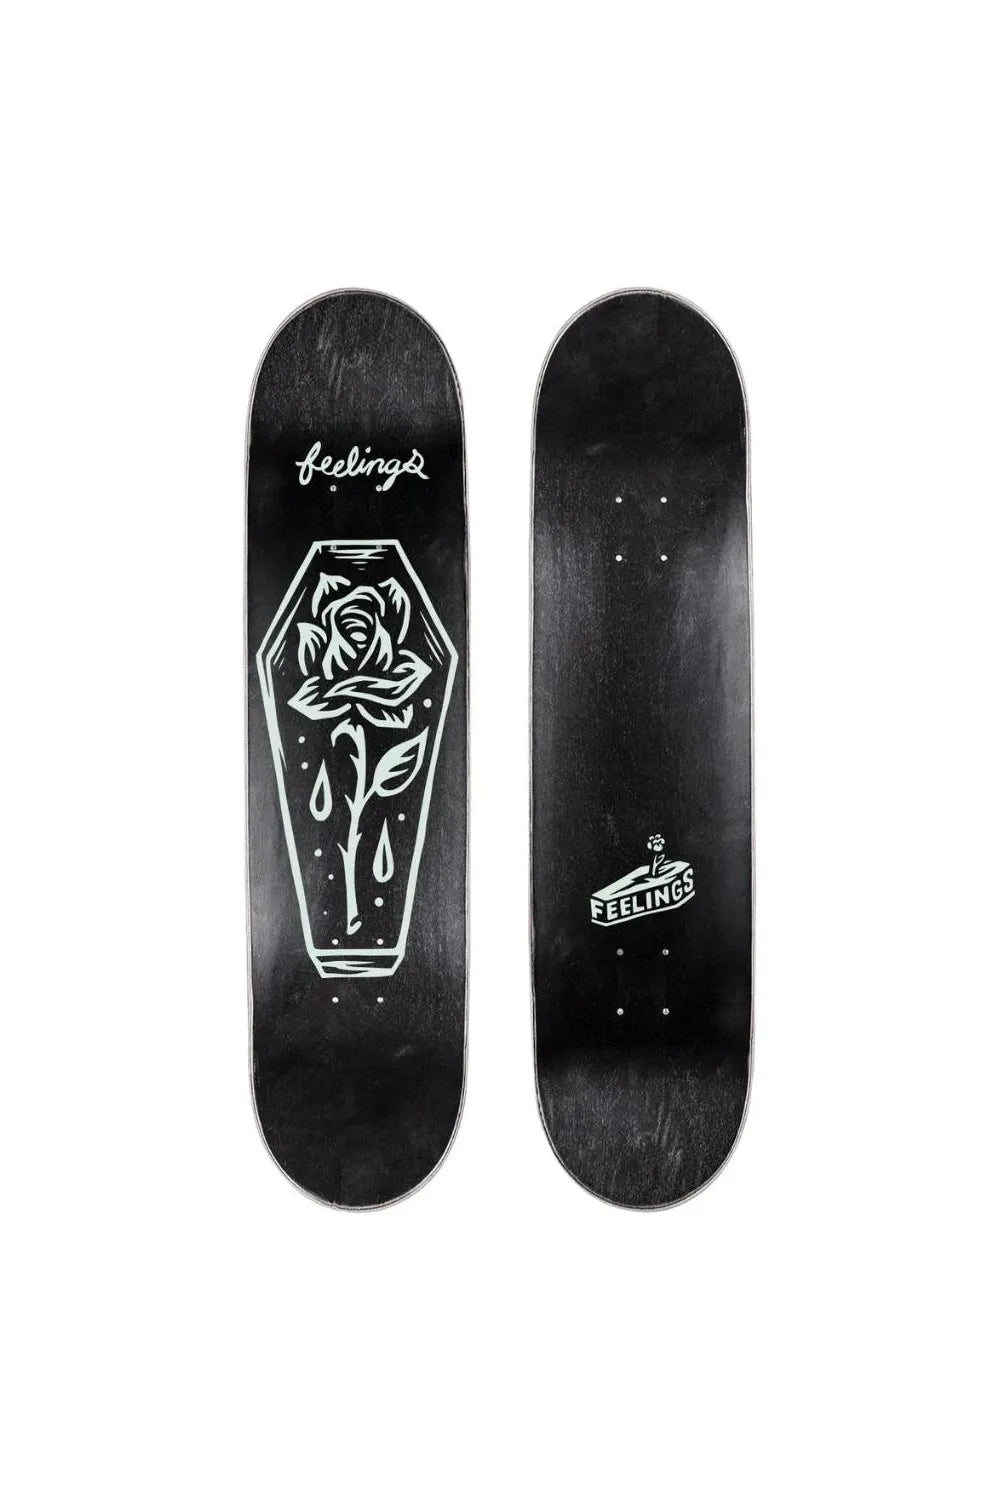 And Feelings Coffin size 8,5 Skateboard Deck Black